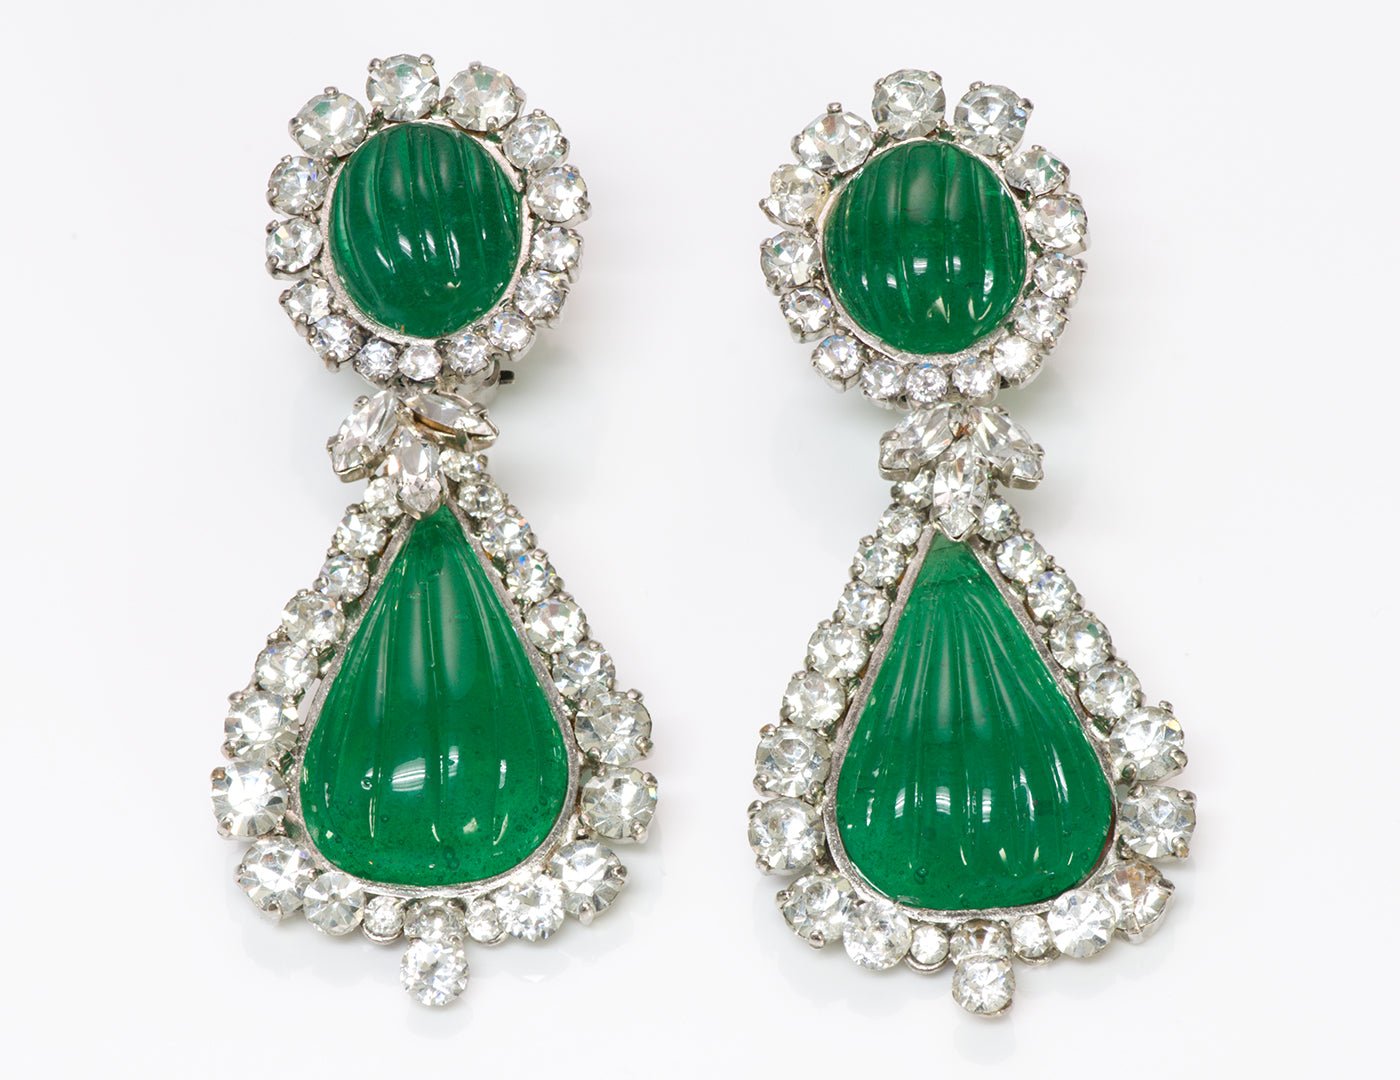 Christian Dior Maison Gripoix Green Poured Glass Earrings